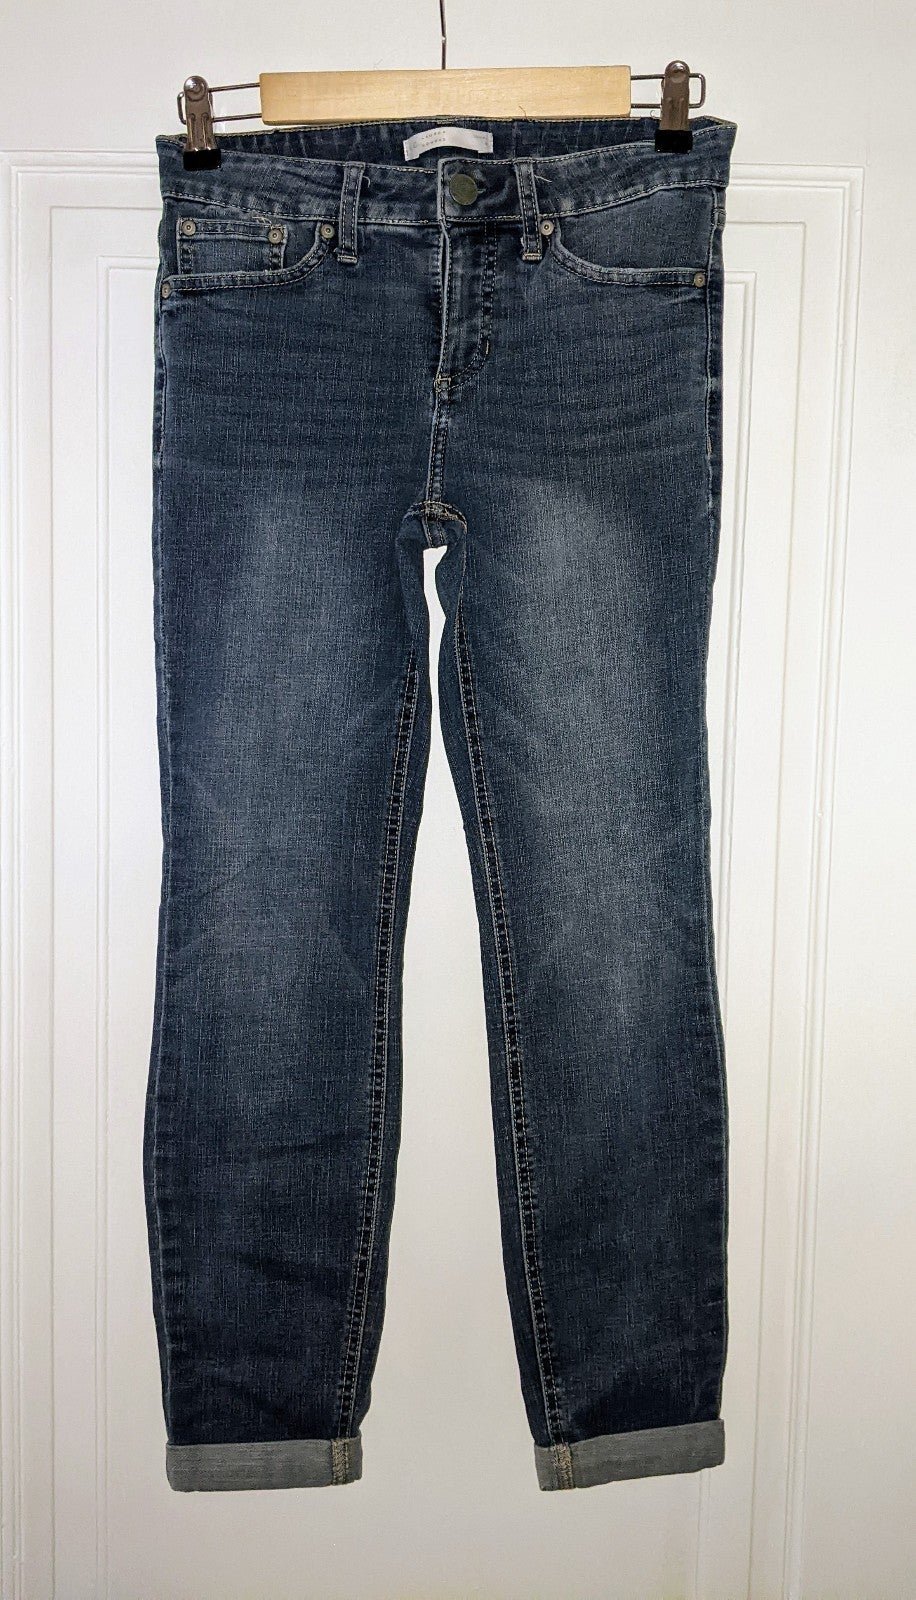 Perfect Jeans Oqj9WVq6k Wholesale